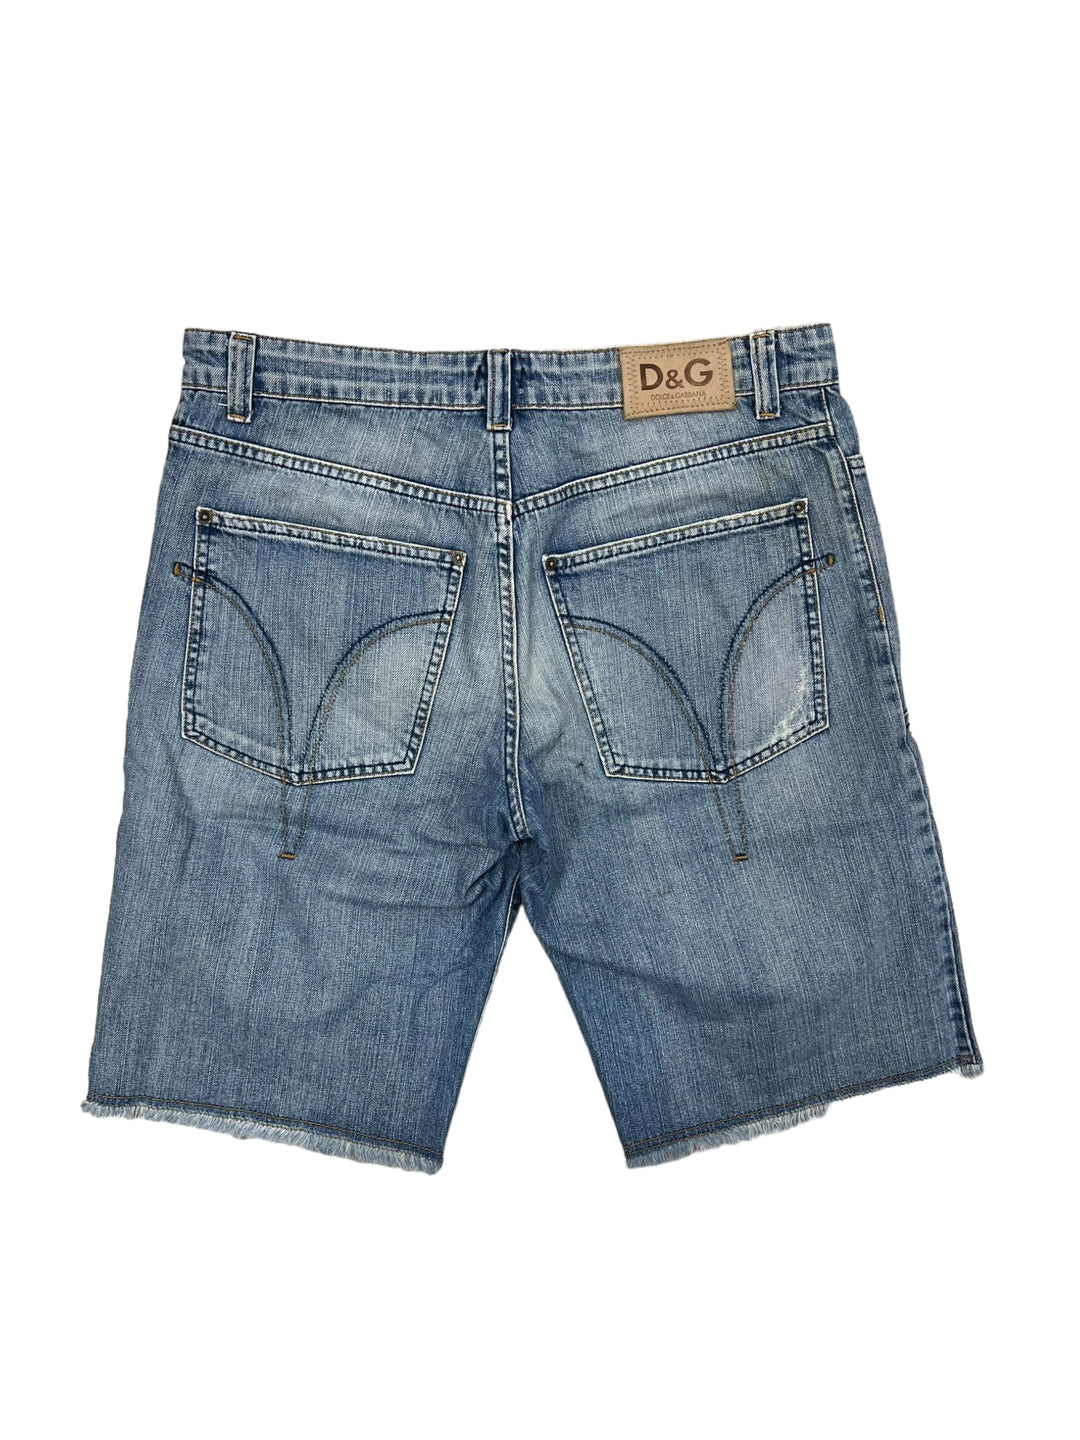 Dolce & Gabbana denim shorts men’s large